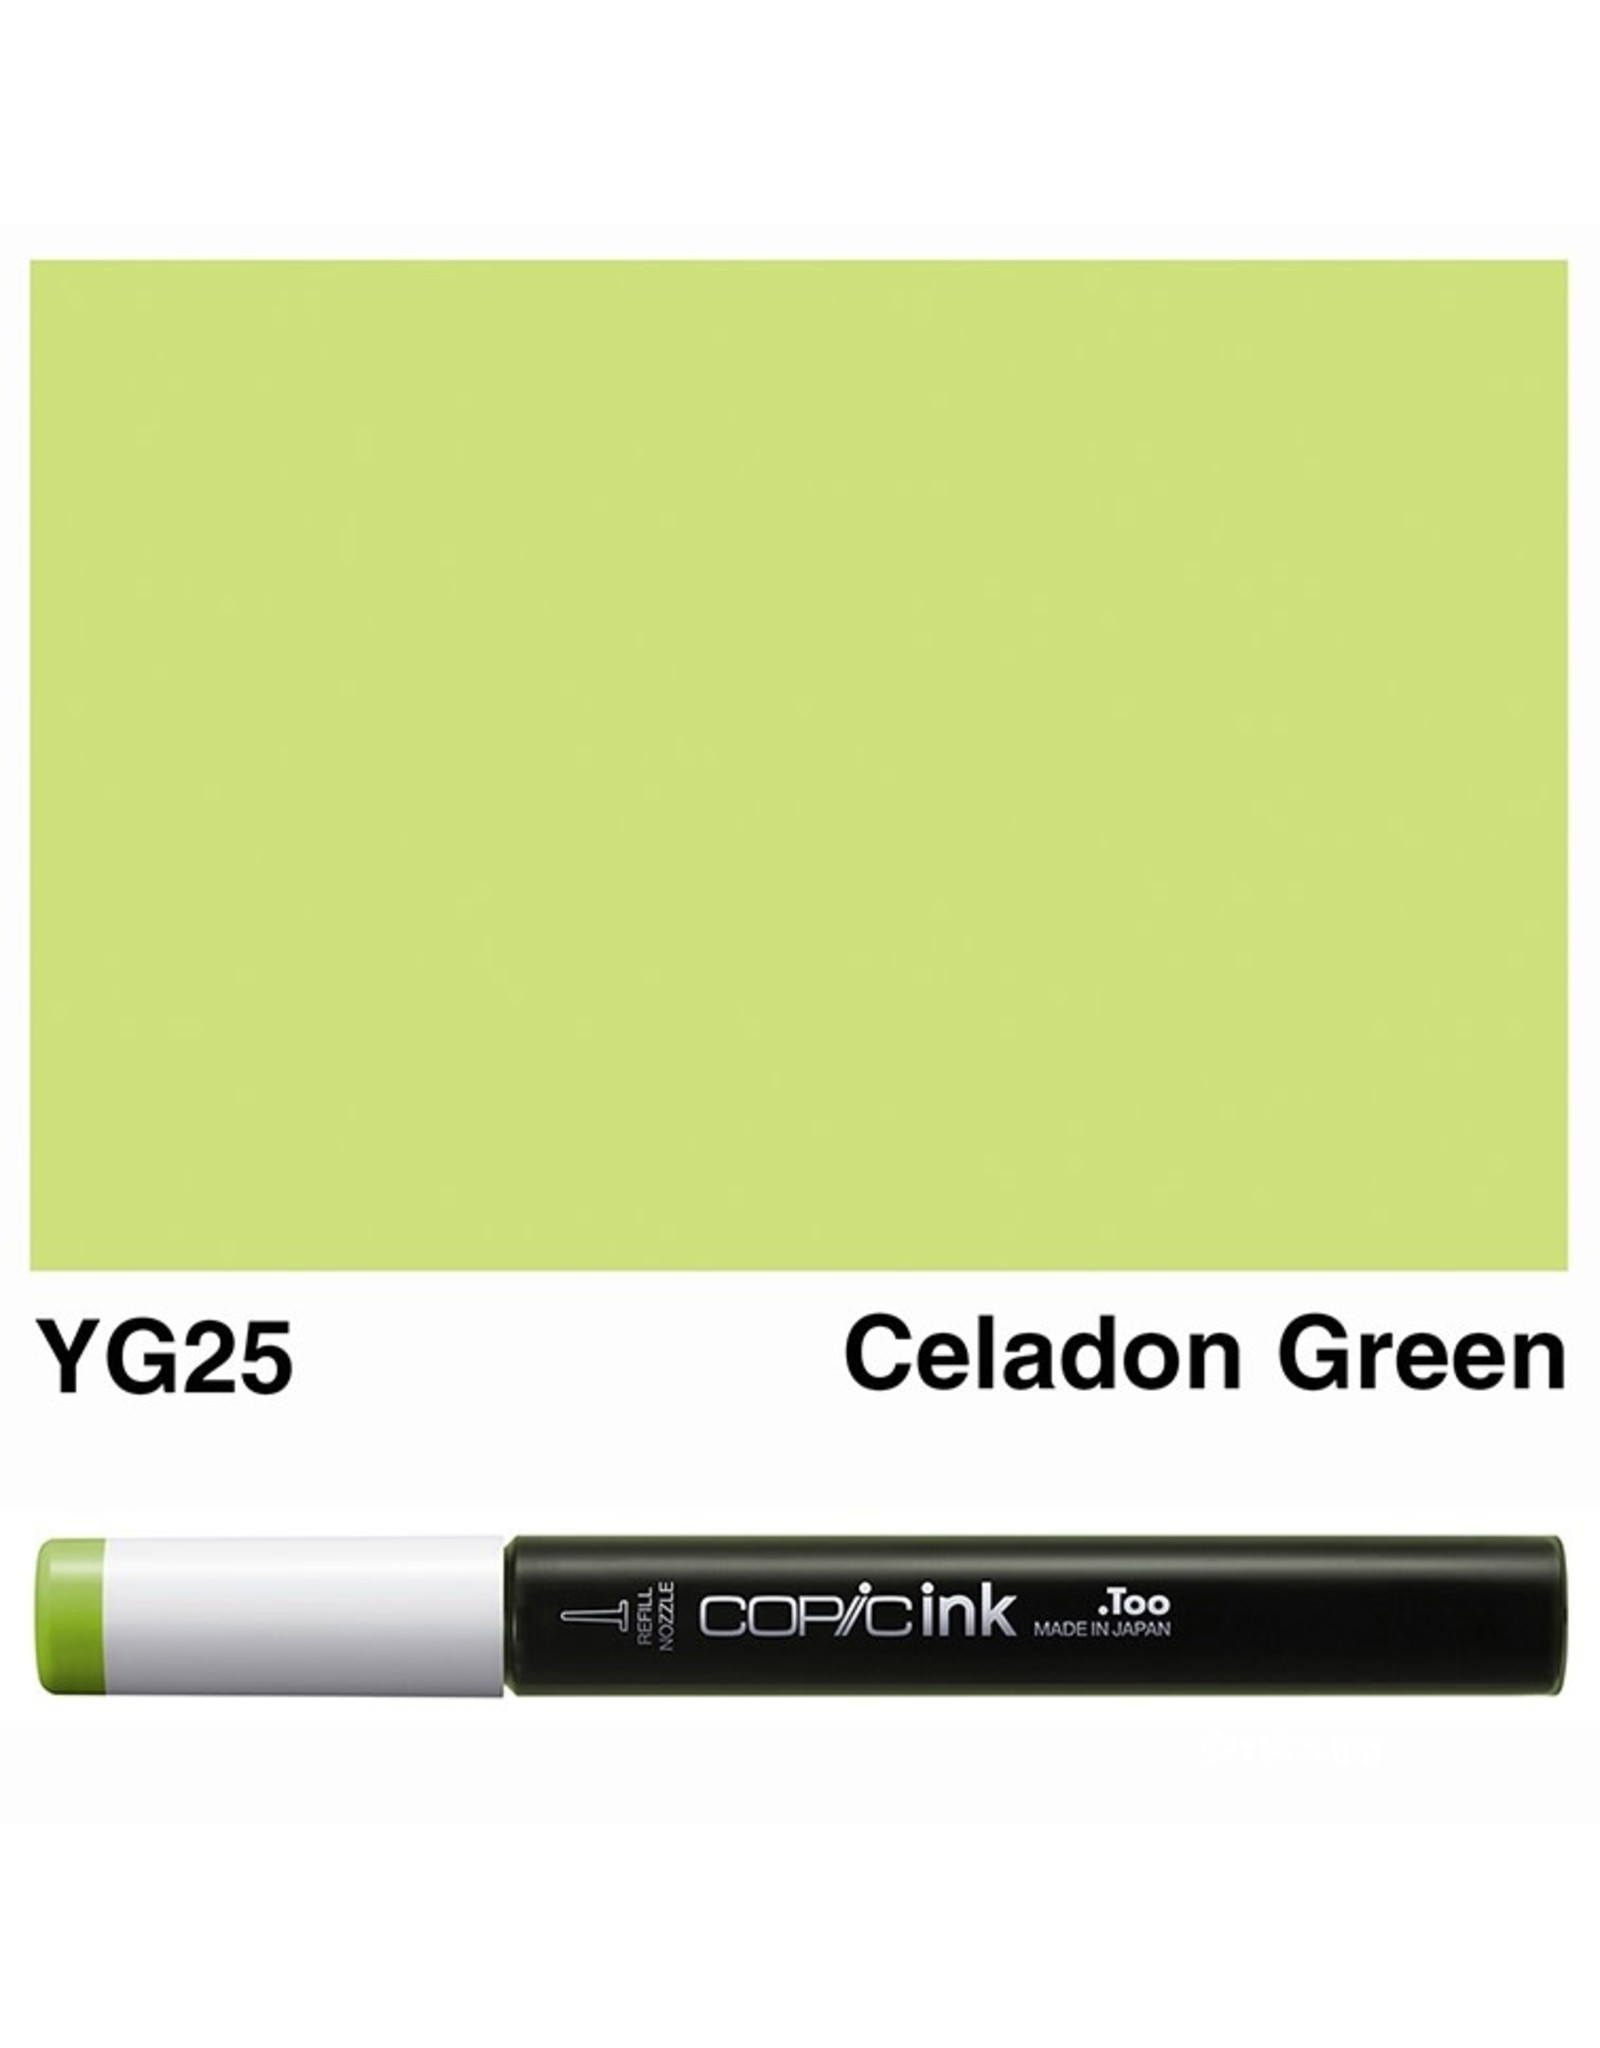 COPIC COPIC YG25 CELADON GREEN REFILL